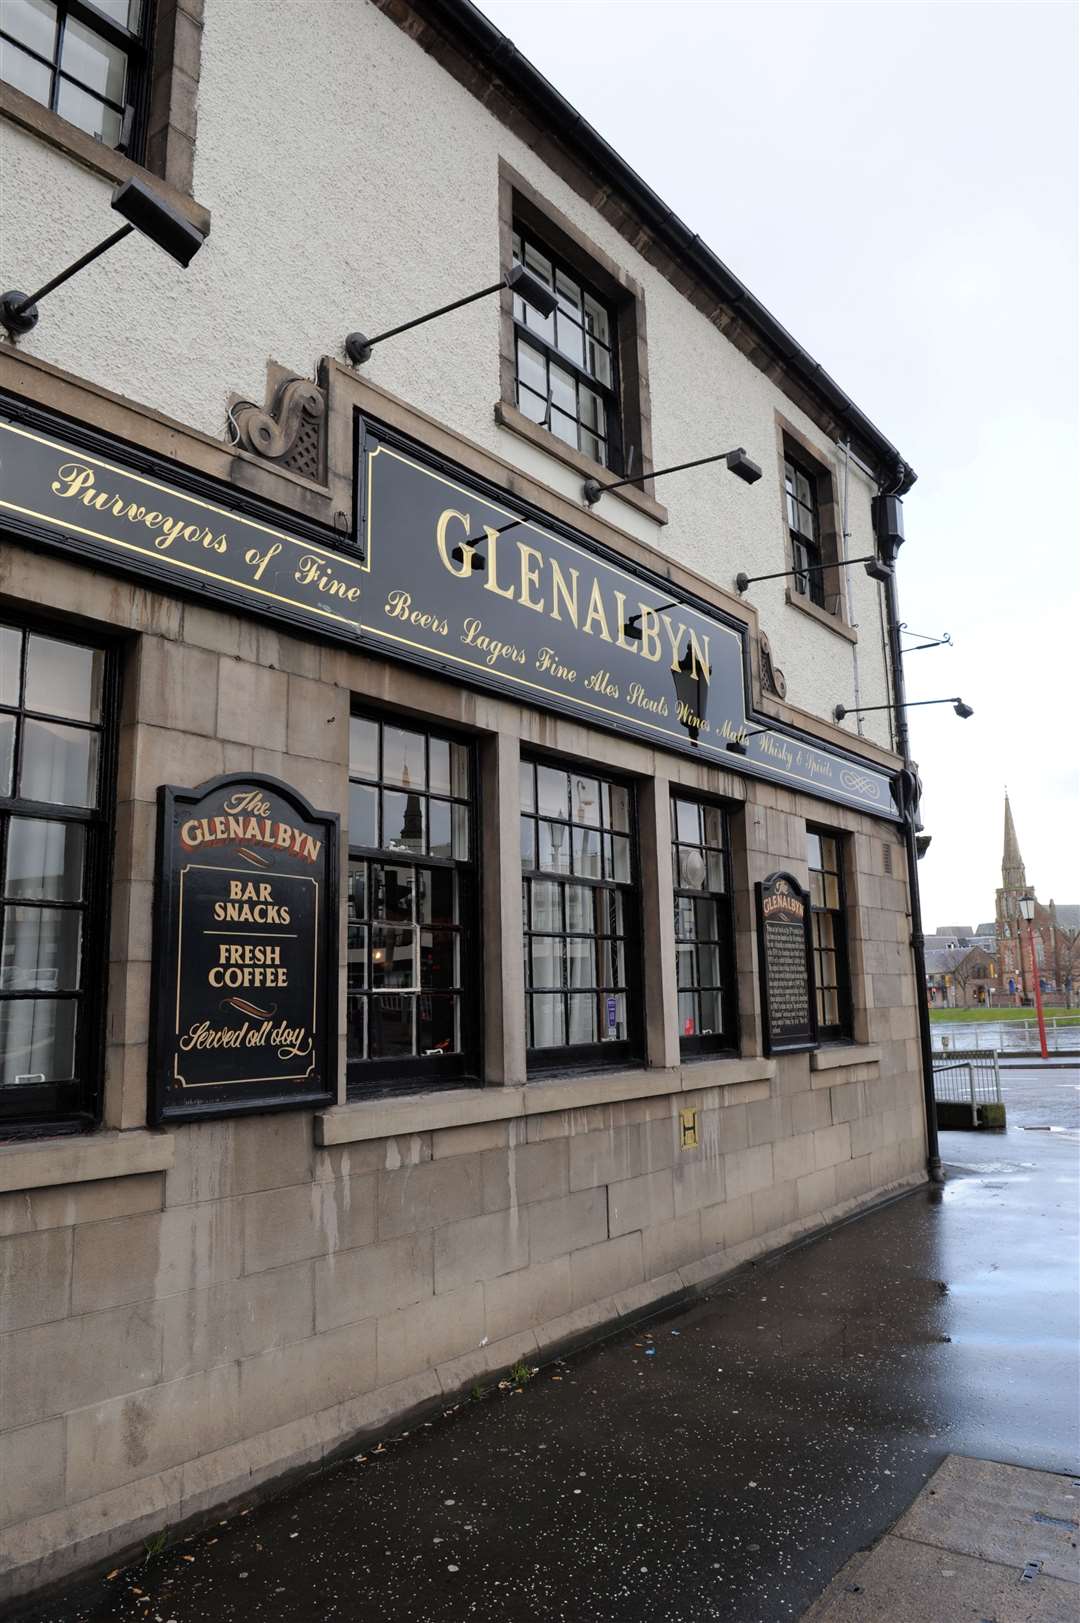 The Glenalbyn pub in Inverness.